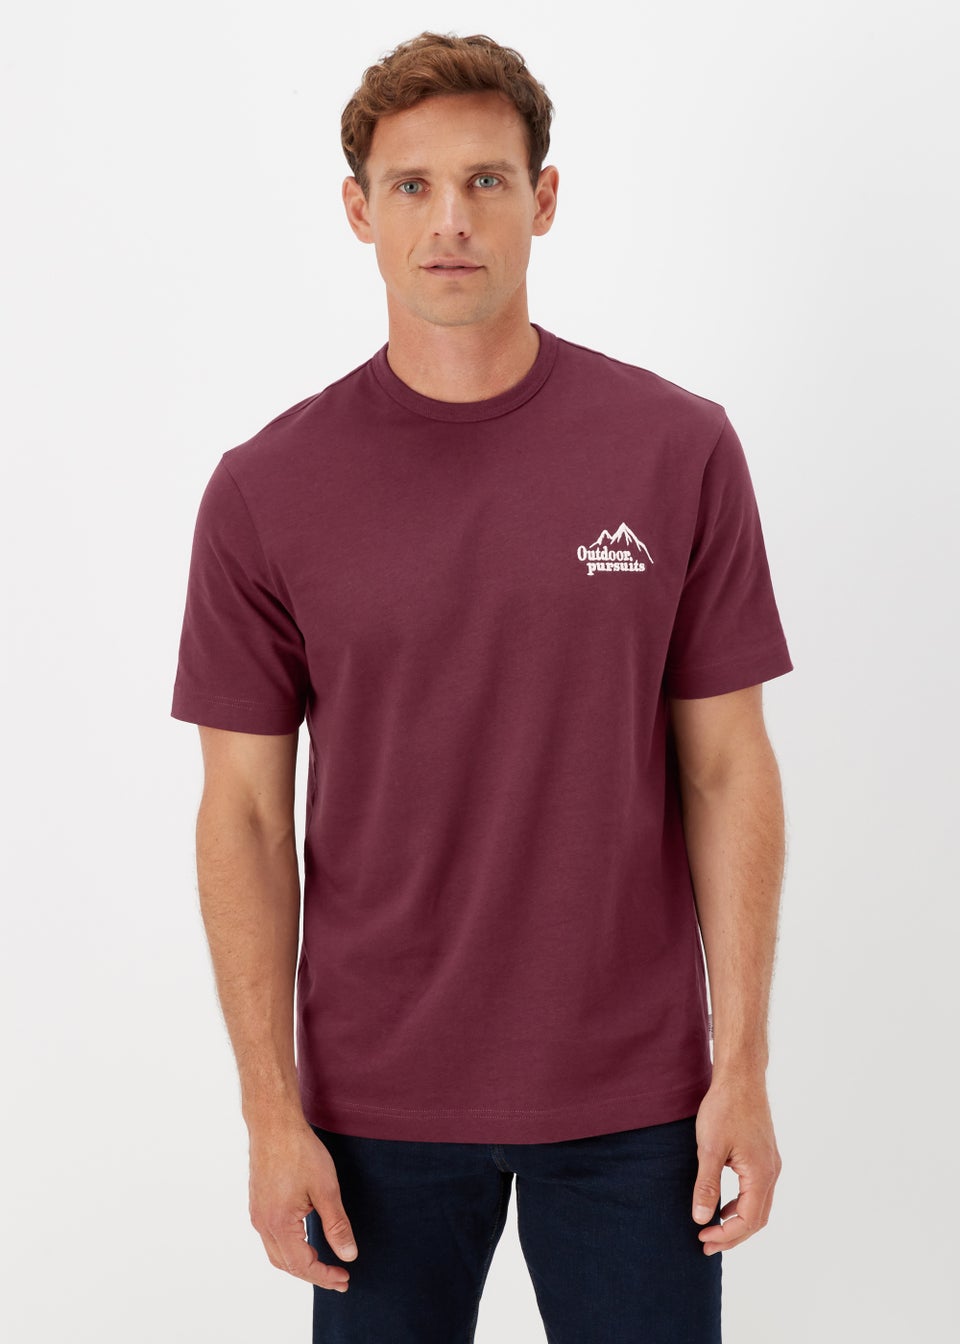 Burgundy Outdoor Pursuits T-Shirt